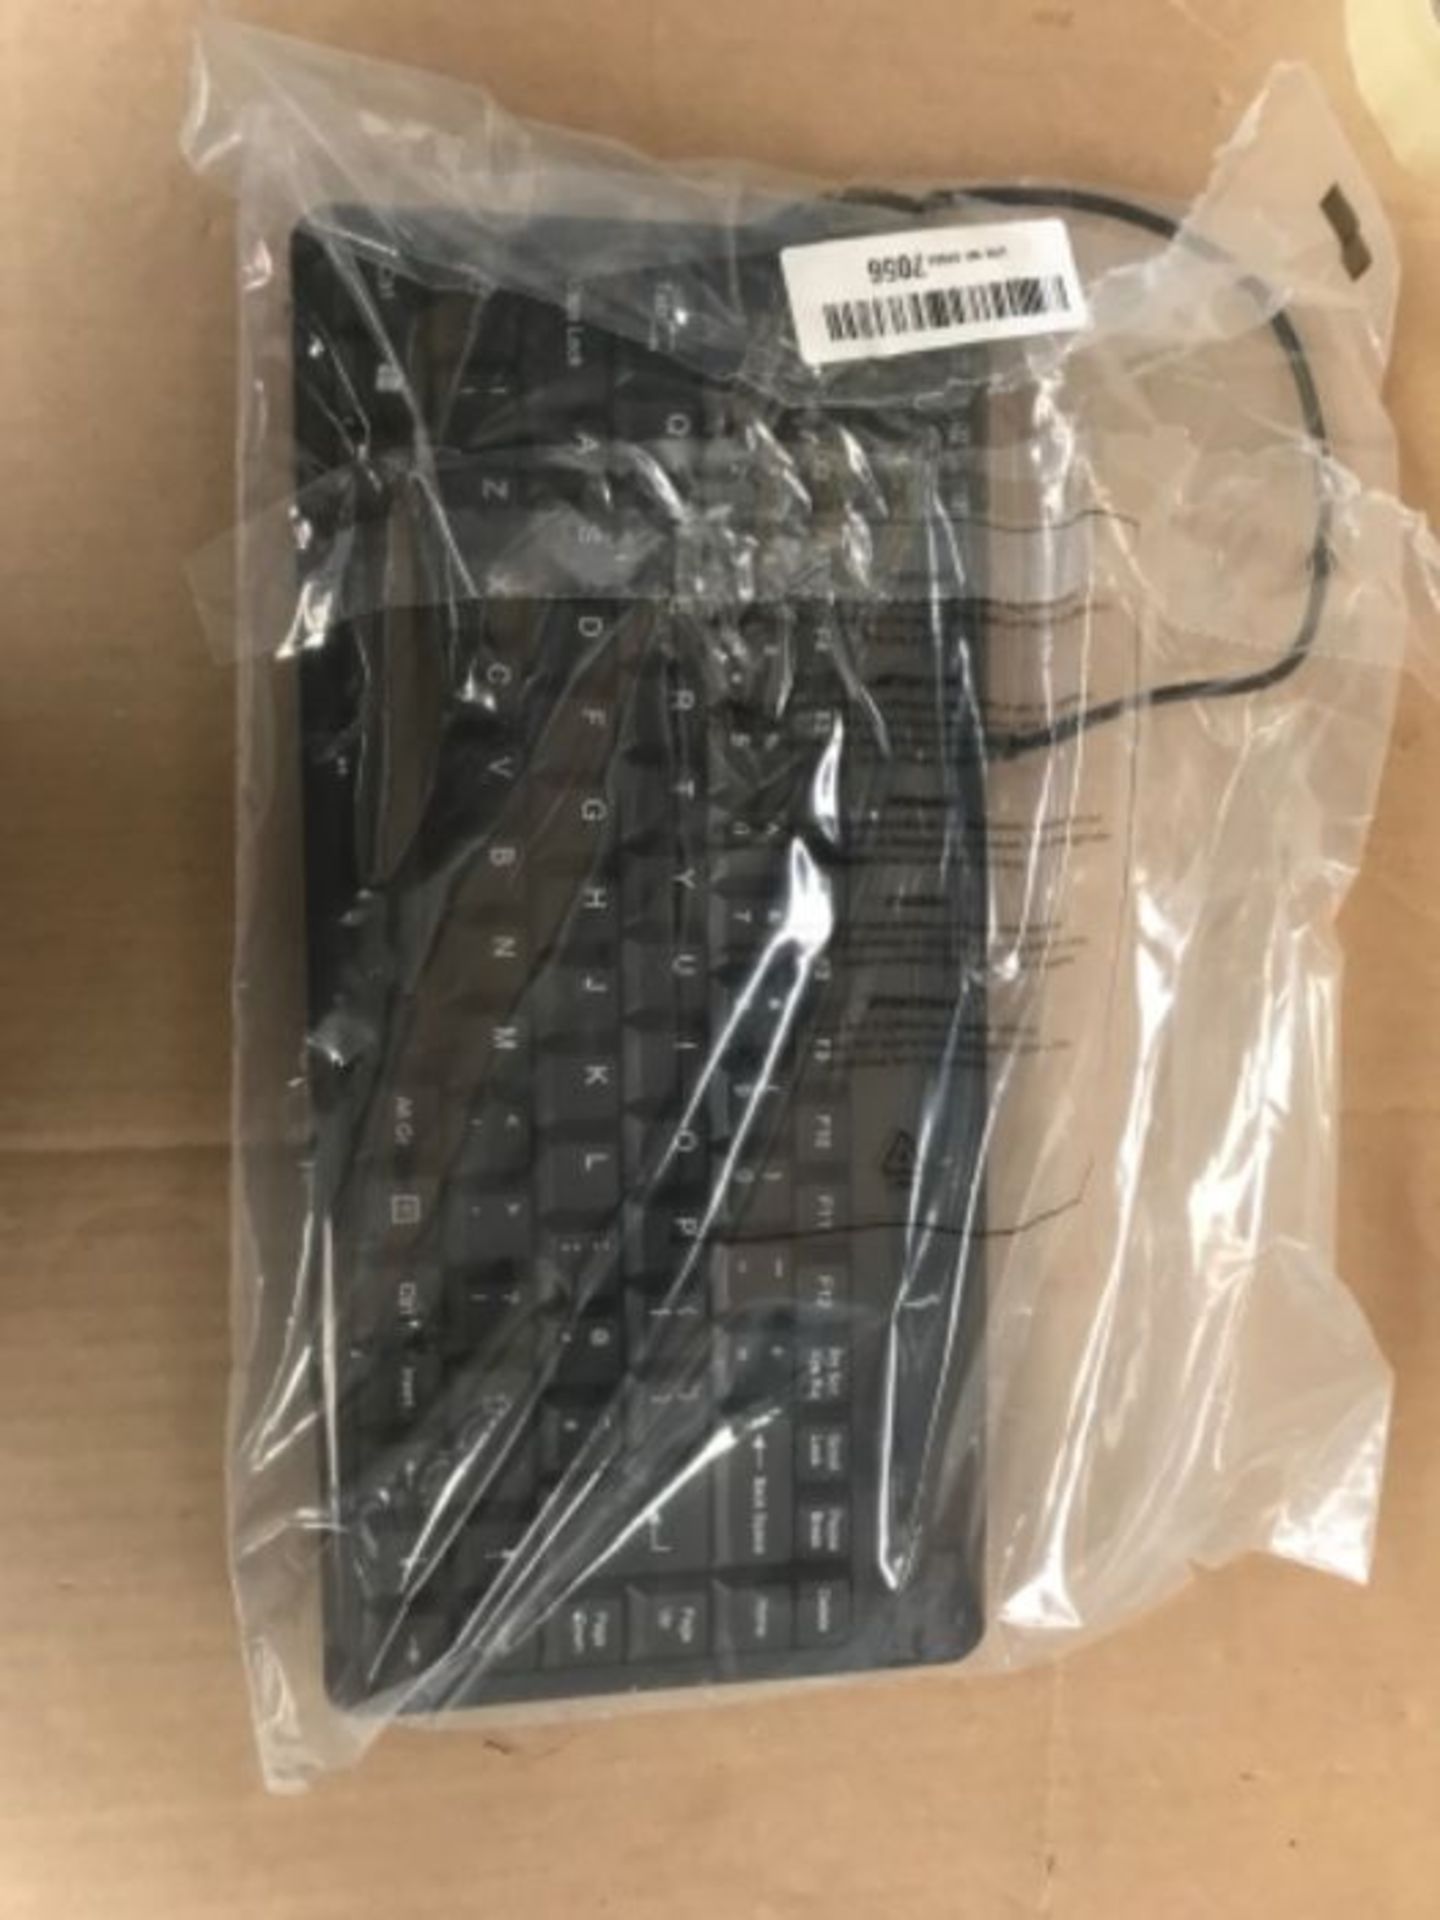 perixx PERIBOARD-409P Wired PS2 Mini Keyboard, Black, UK Layout - Image 2 of 2